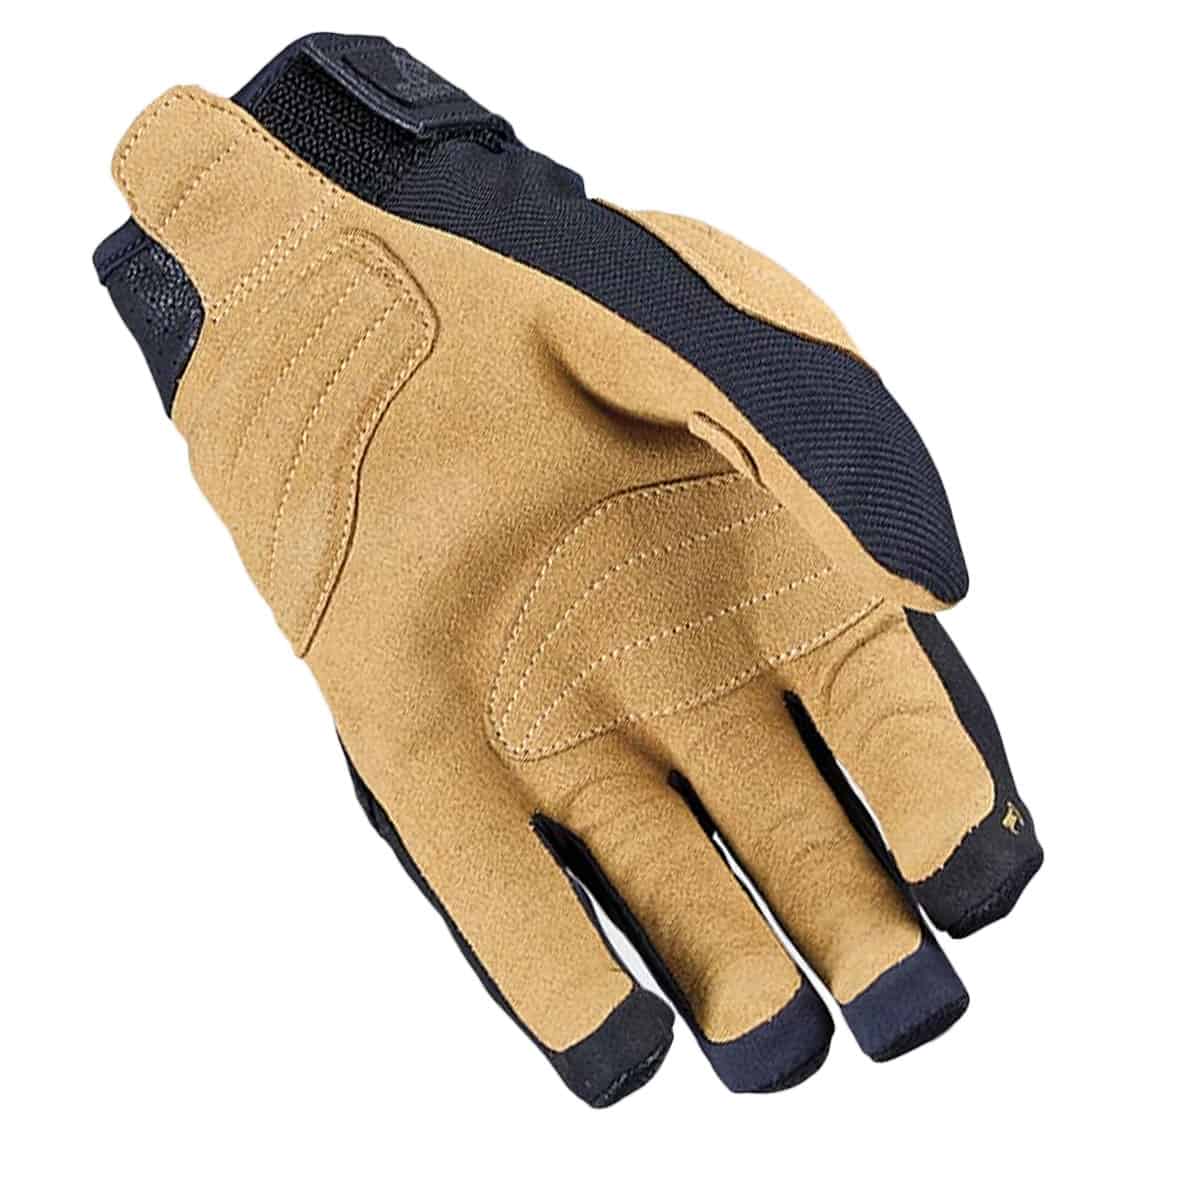 Five Scrambler Gloves: Light-weight summer gloves with digital finger 2